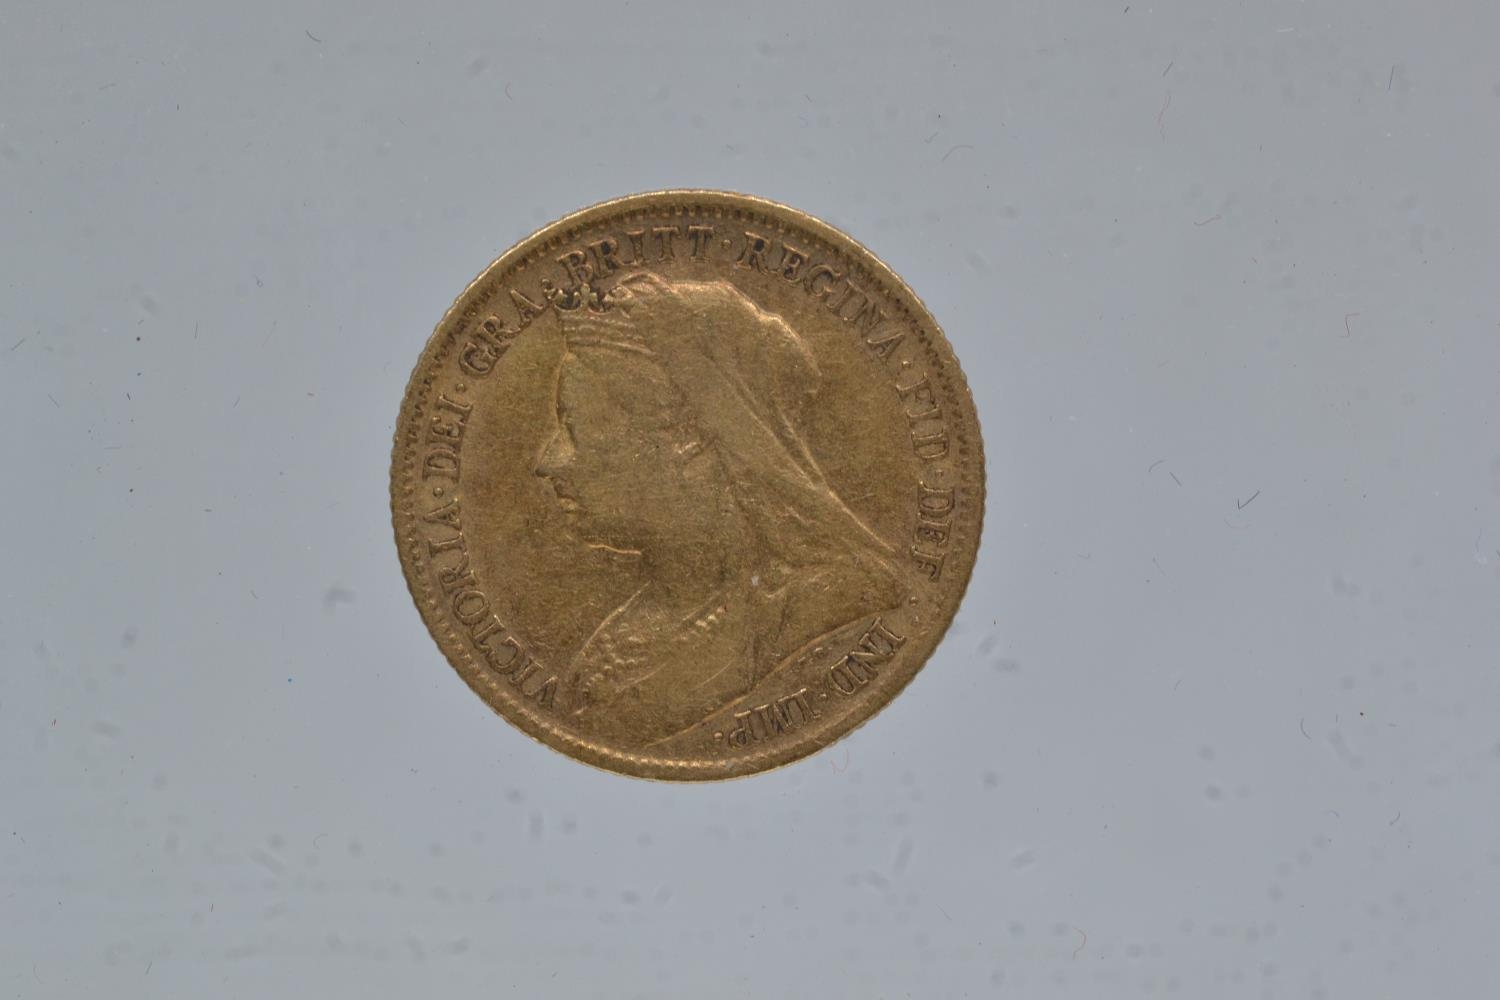 1899 Victoria (Old Head) half sovereign  - Image 2 of 2